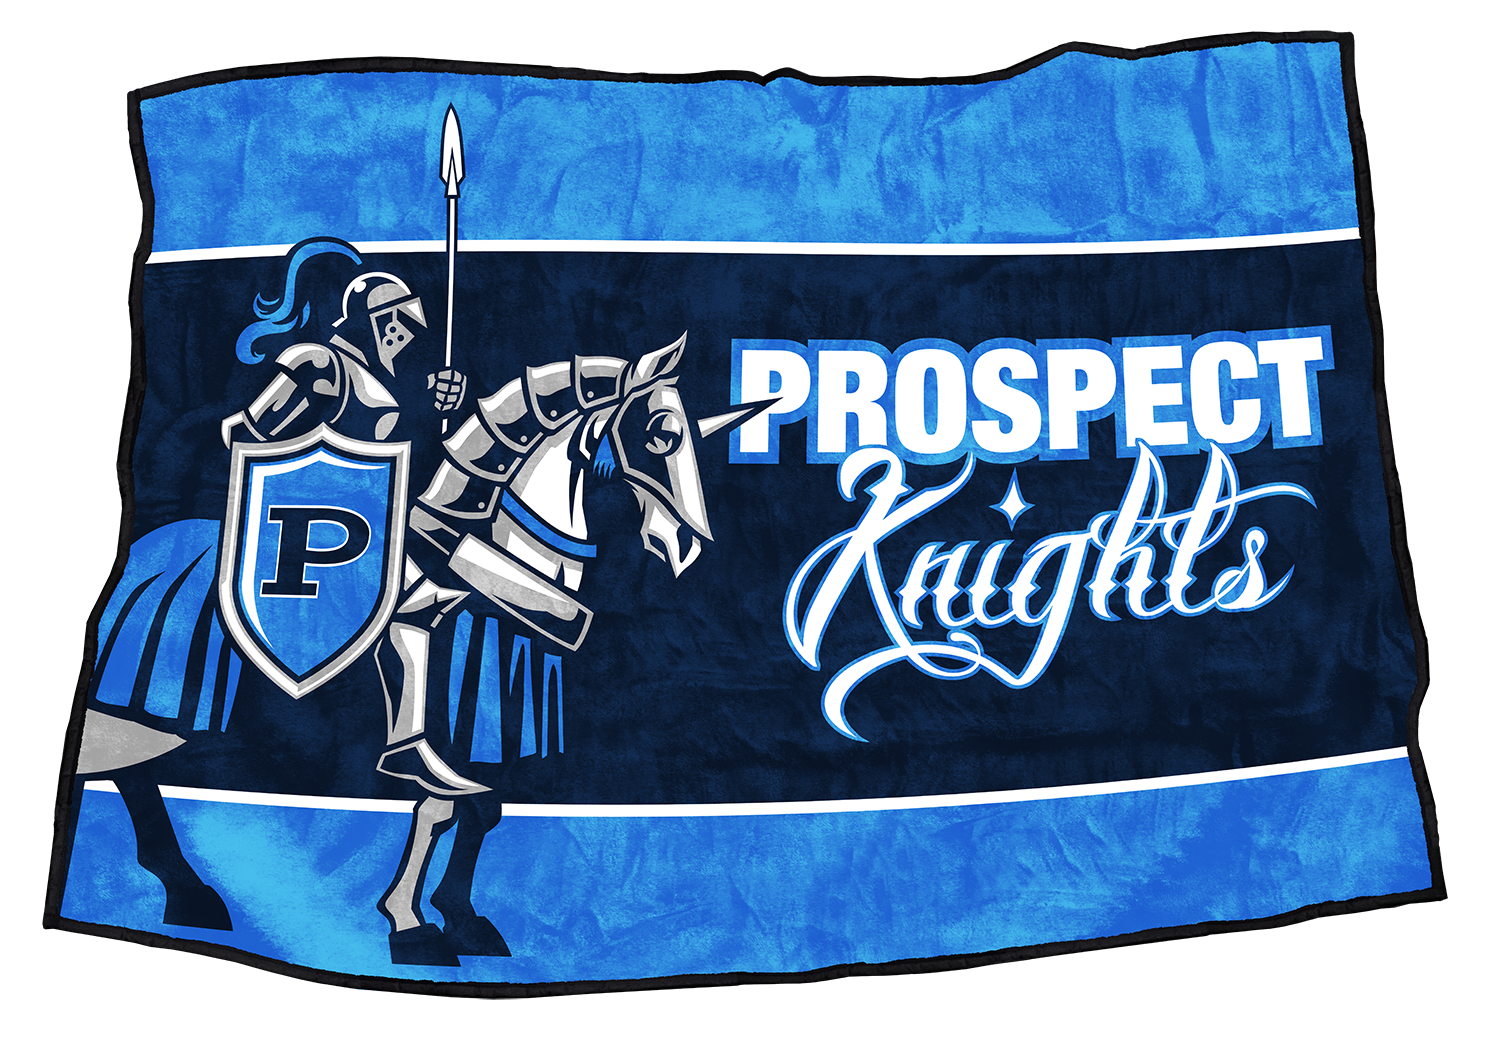 Prospect Knights